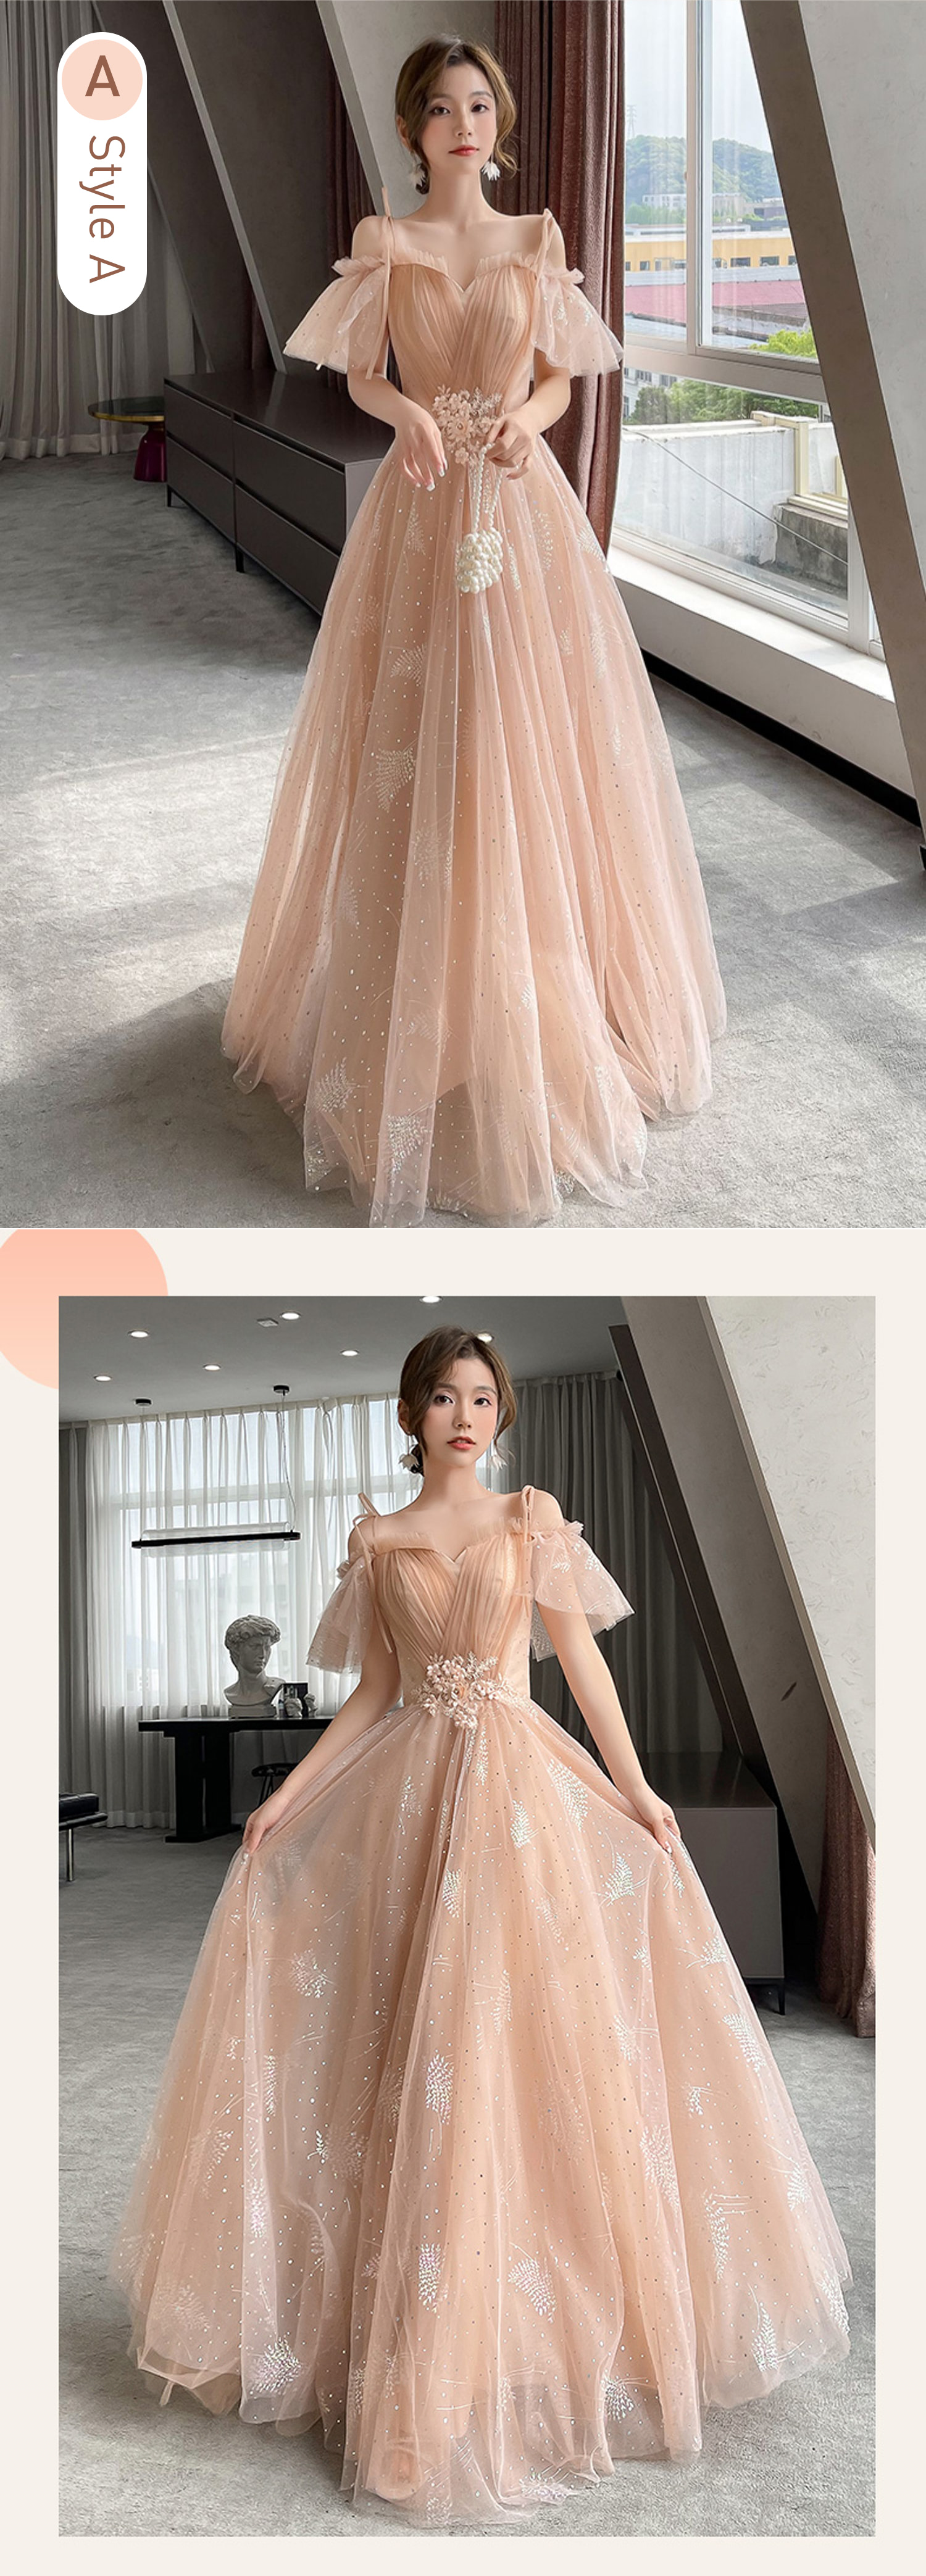 Fashion-Khaki-A-line-Bridal-Wedding-Party-Chiffon-Dress-for-Women16.jpg